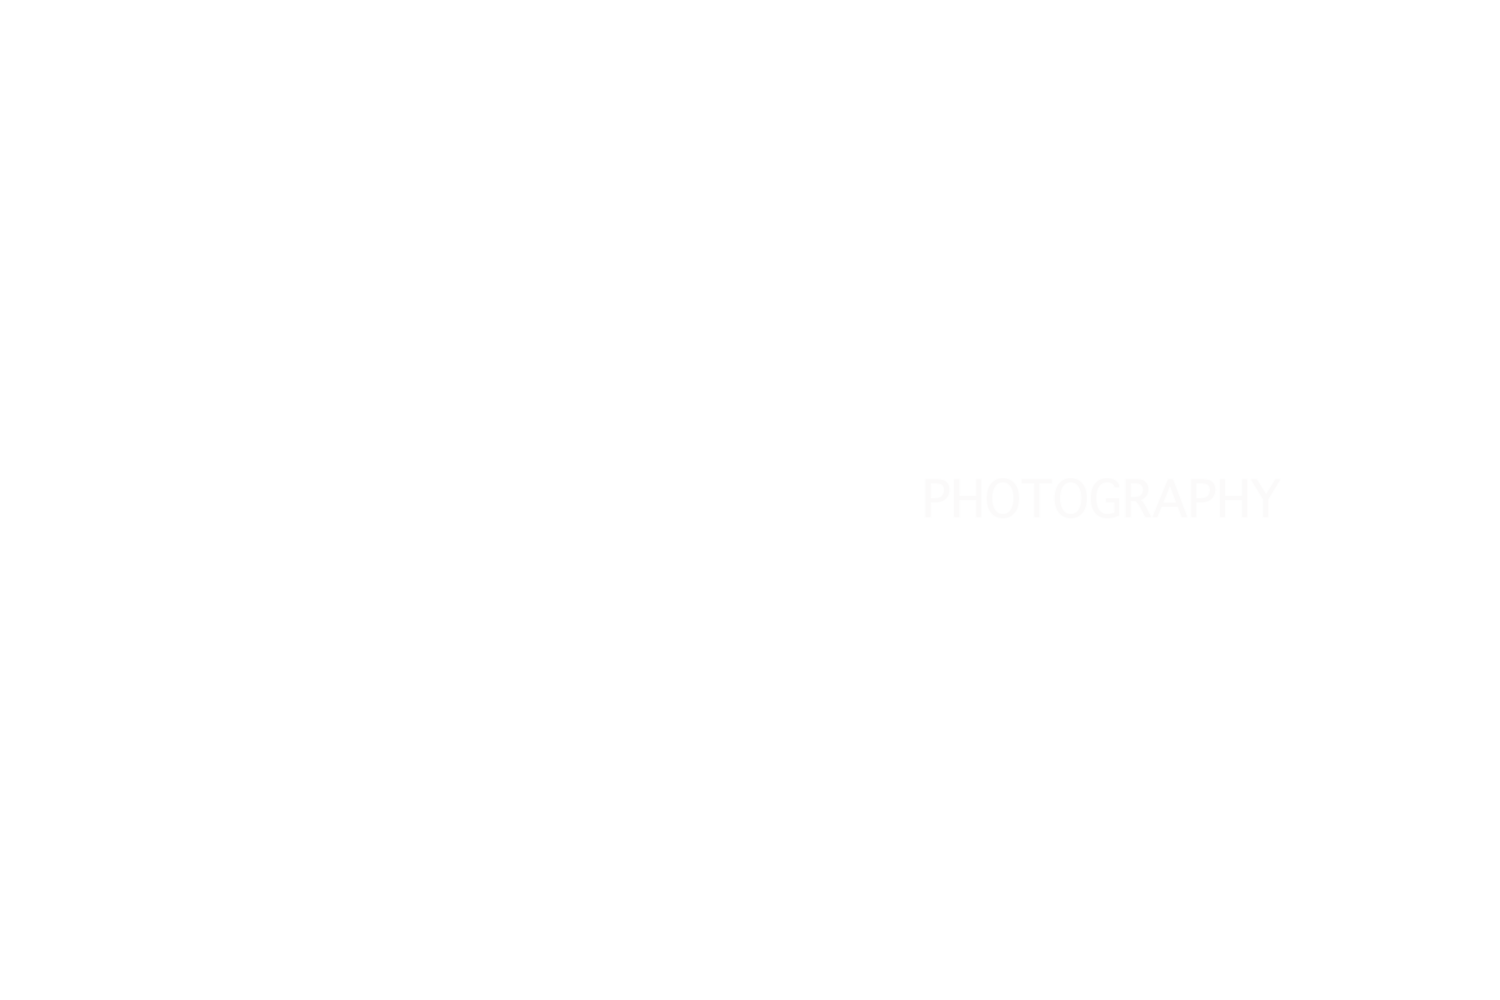 Ash Karas Photography